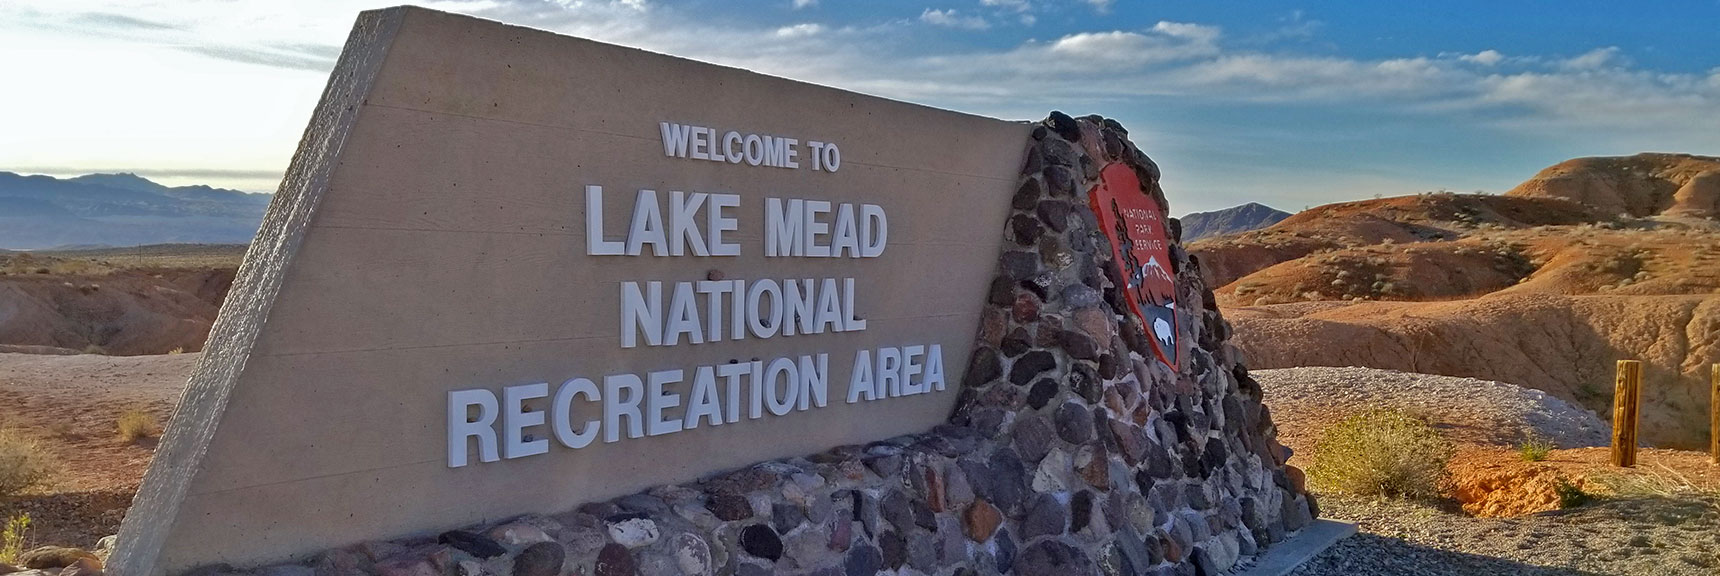 North Shore Road Tour |Lake Mead National Recreation Area, Nevada